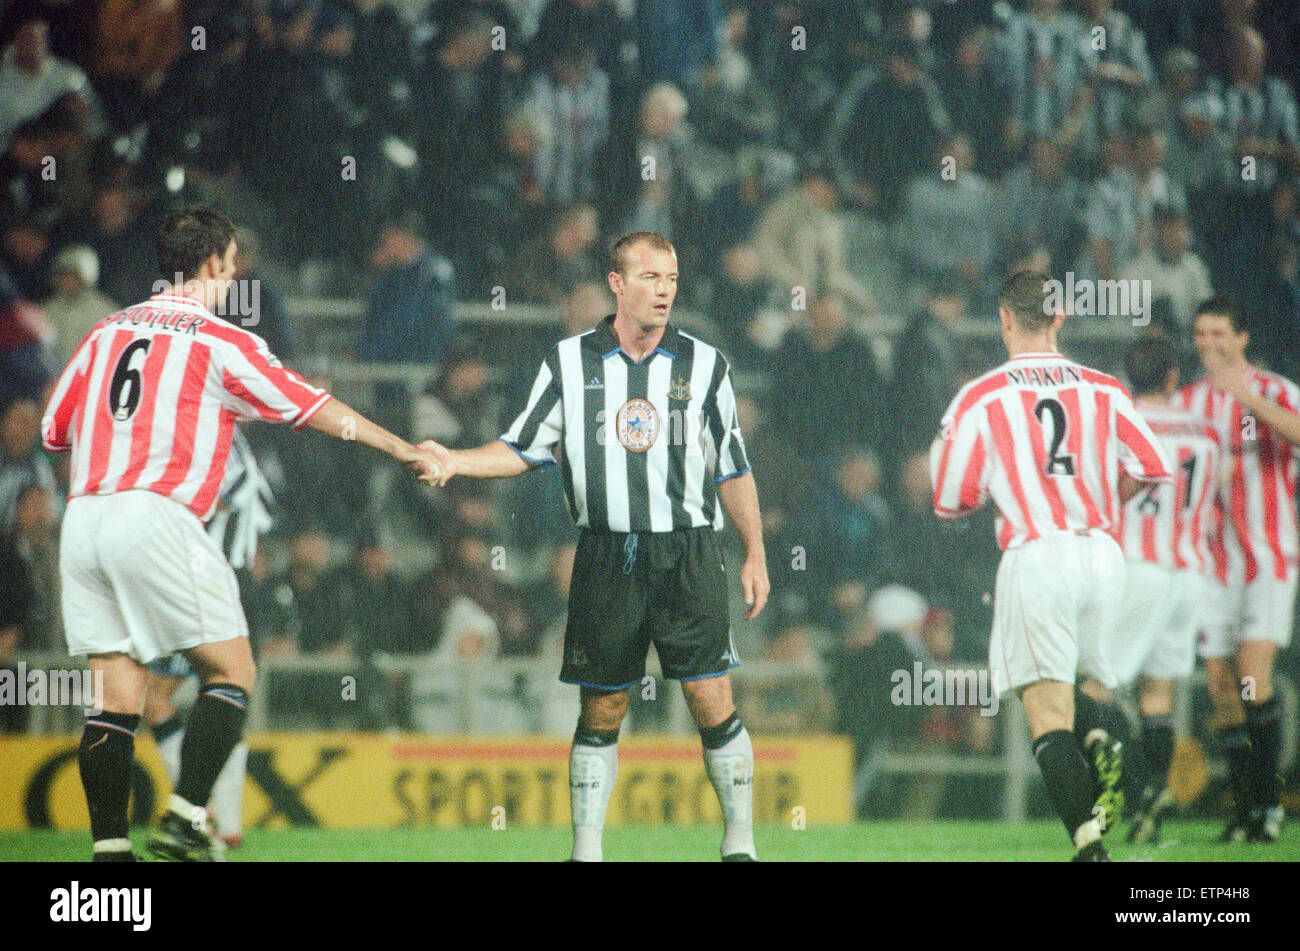 Newcastle 1-2 Sunderland, Premier league match presso il St James Park, mercoledì 25 agosto 1999. Alan Shearer Foto Stock